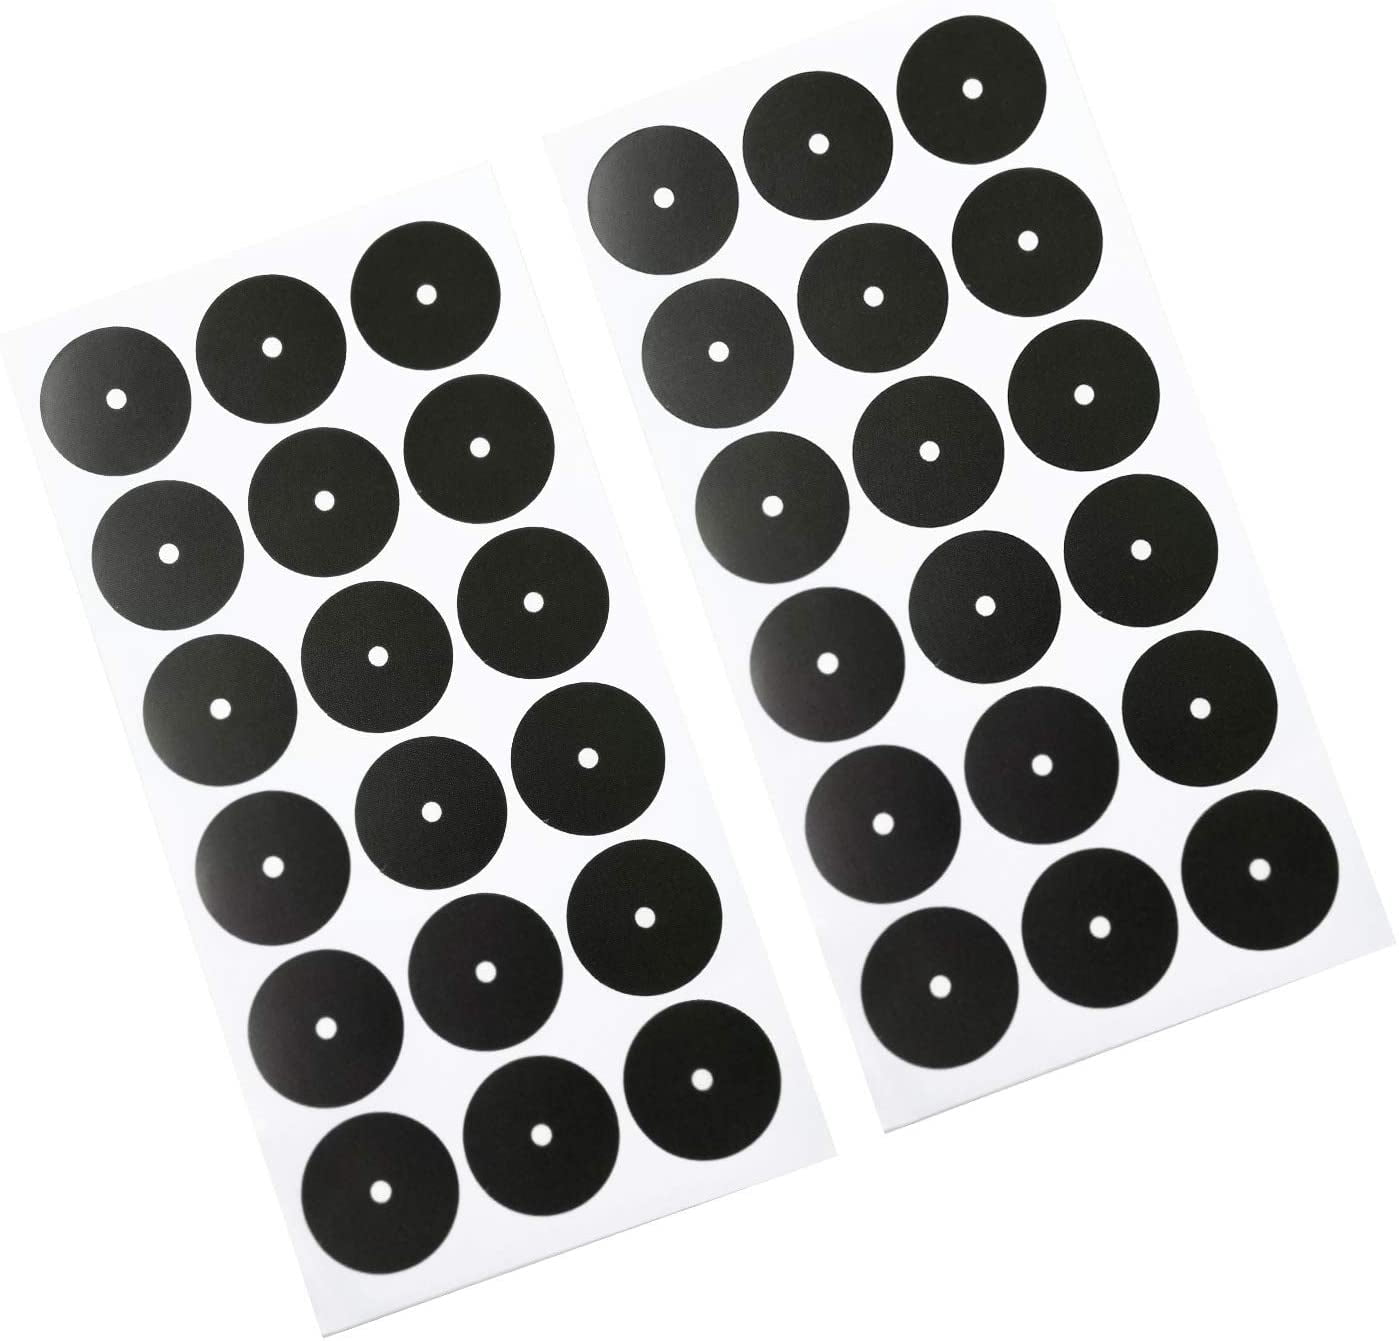 Baosity 15Pcs American Pool Table Spot Billiard Cue Ball Point Position Sticker Marker